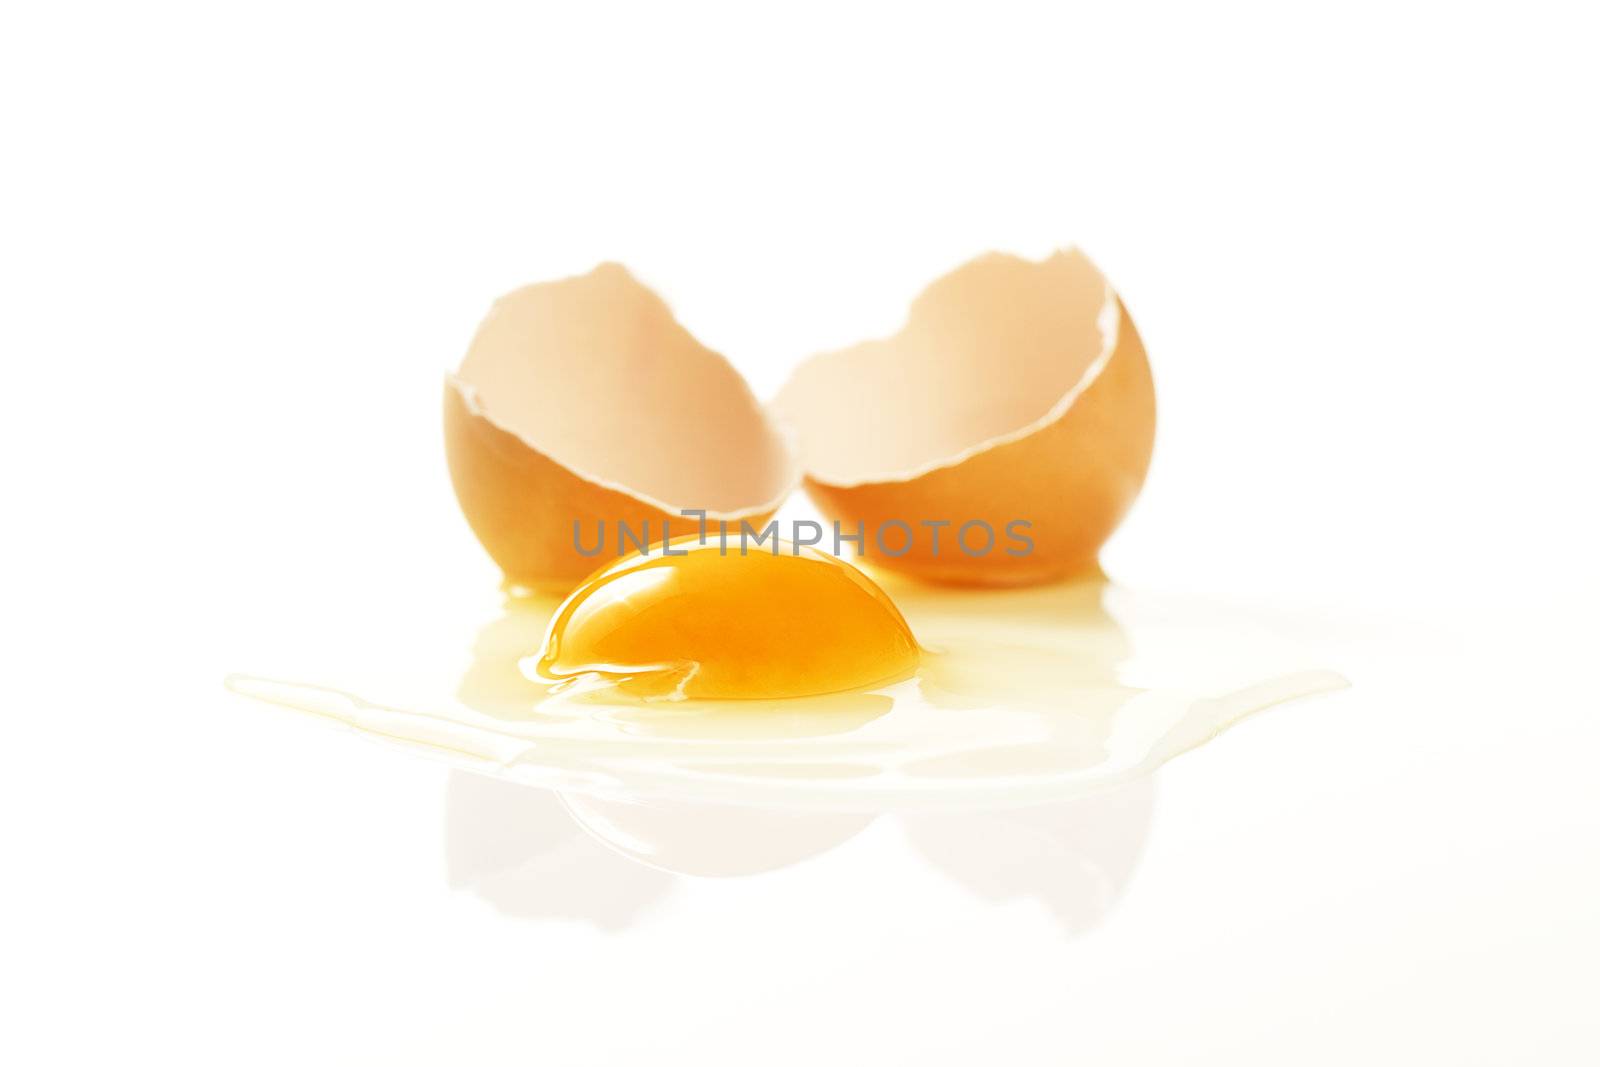 cracked egg on white background